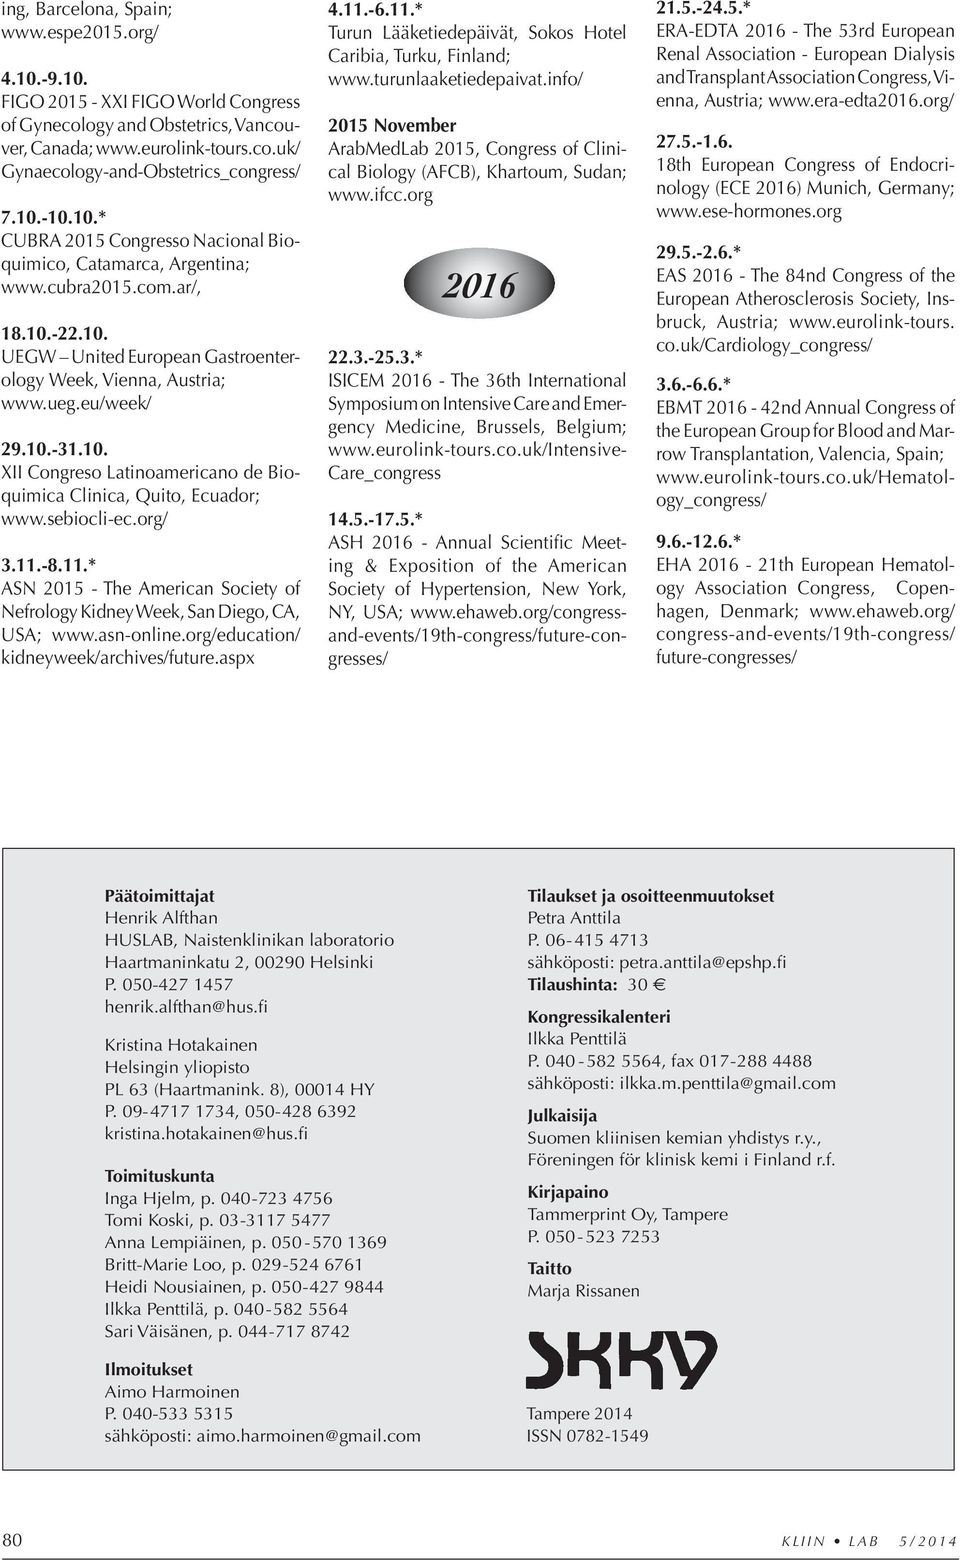 10. XII Congreso Latinoamericano de Bioquimica Clinica, Quito, Ecuador; www.sebiocli-ec.org/ 3.11.-8.11.* ASN 2015 - The American Society of Nefrology Kidney Week, San Diego, CA, USA; www.asn-online.